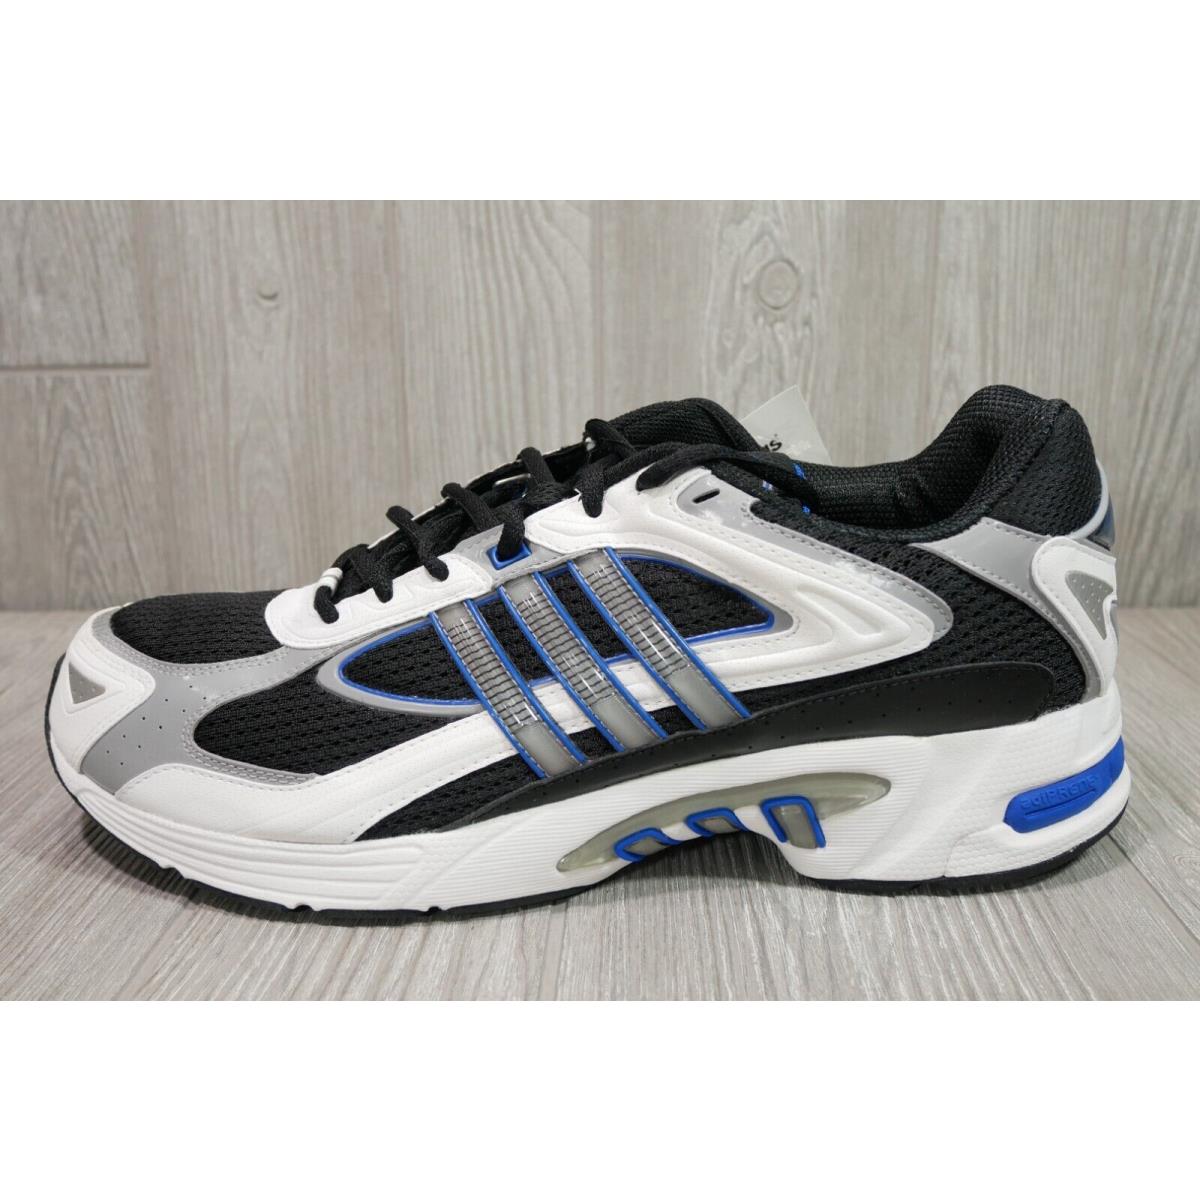 Vintage Adidas Response Cushion Running Shoes 2004 Mens Sz 10 11.5 13 Oss